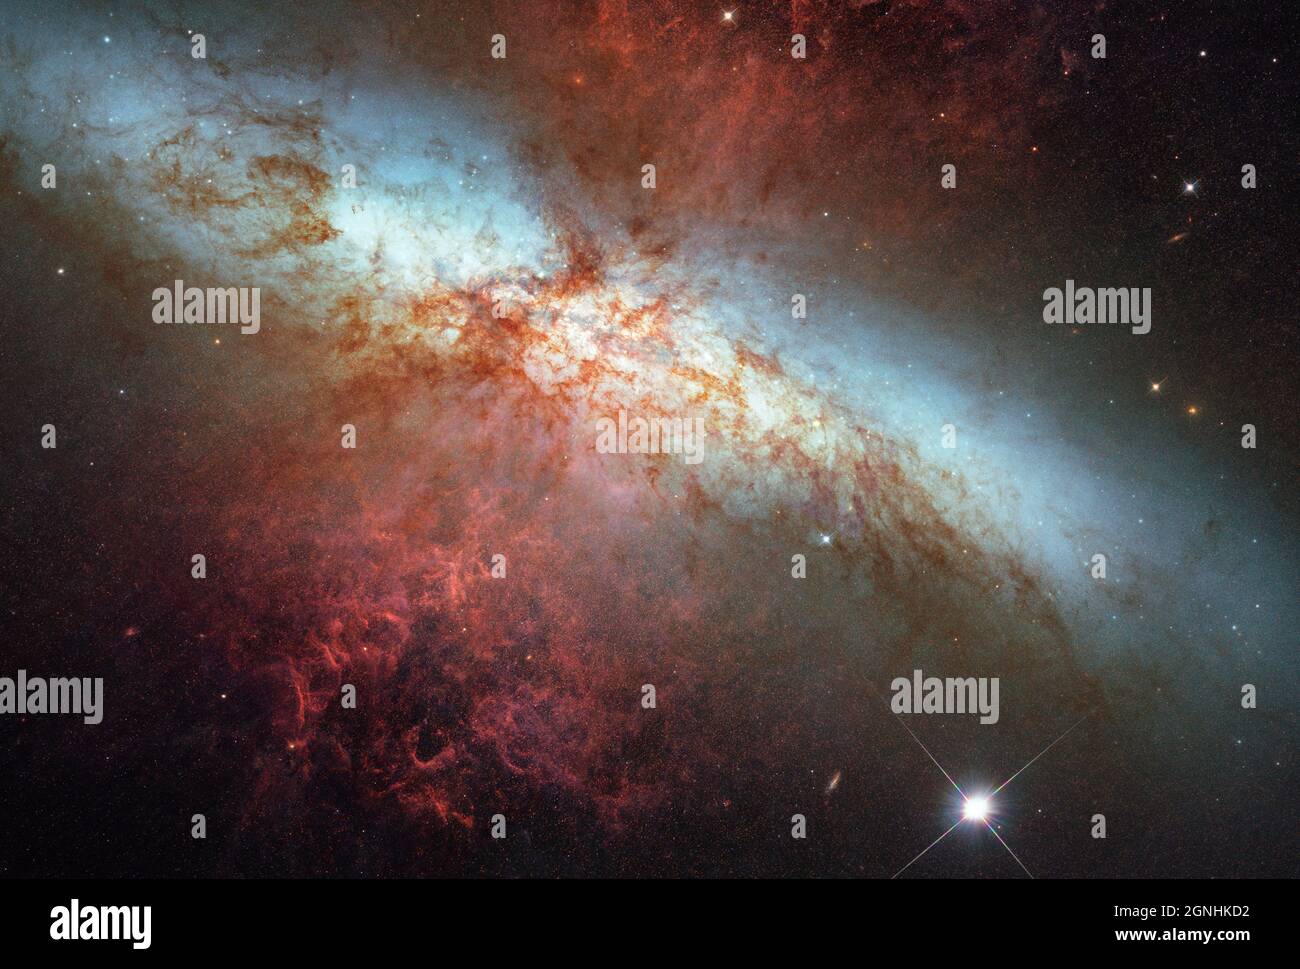 STARBURST GALAXY M82 HUBBLE SPACE TELESCOPE 11x14 SILVER HALIDE PHOTO PRINT 